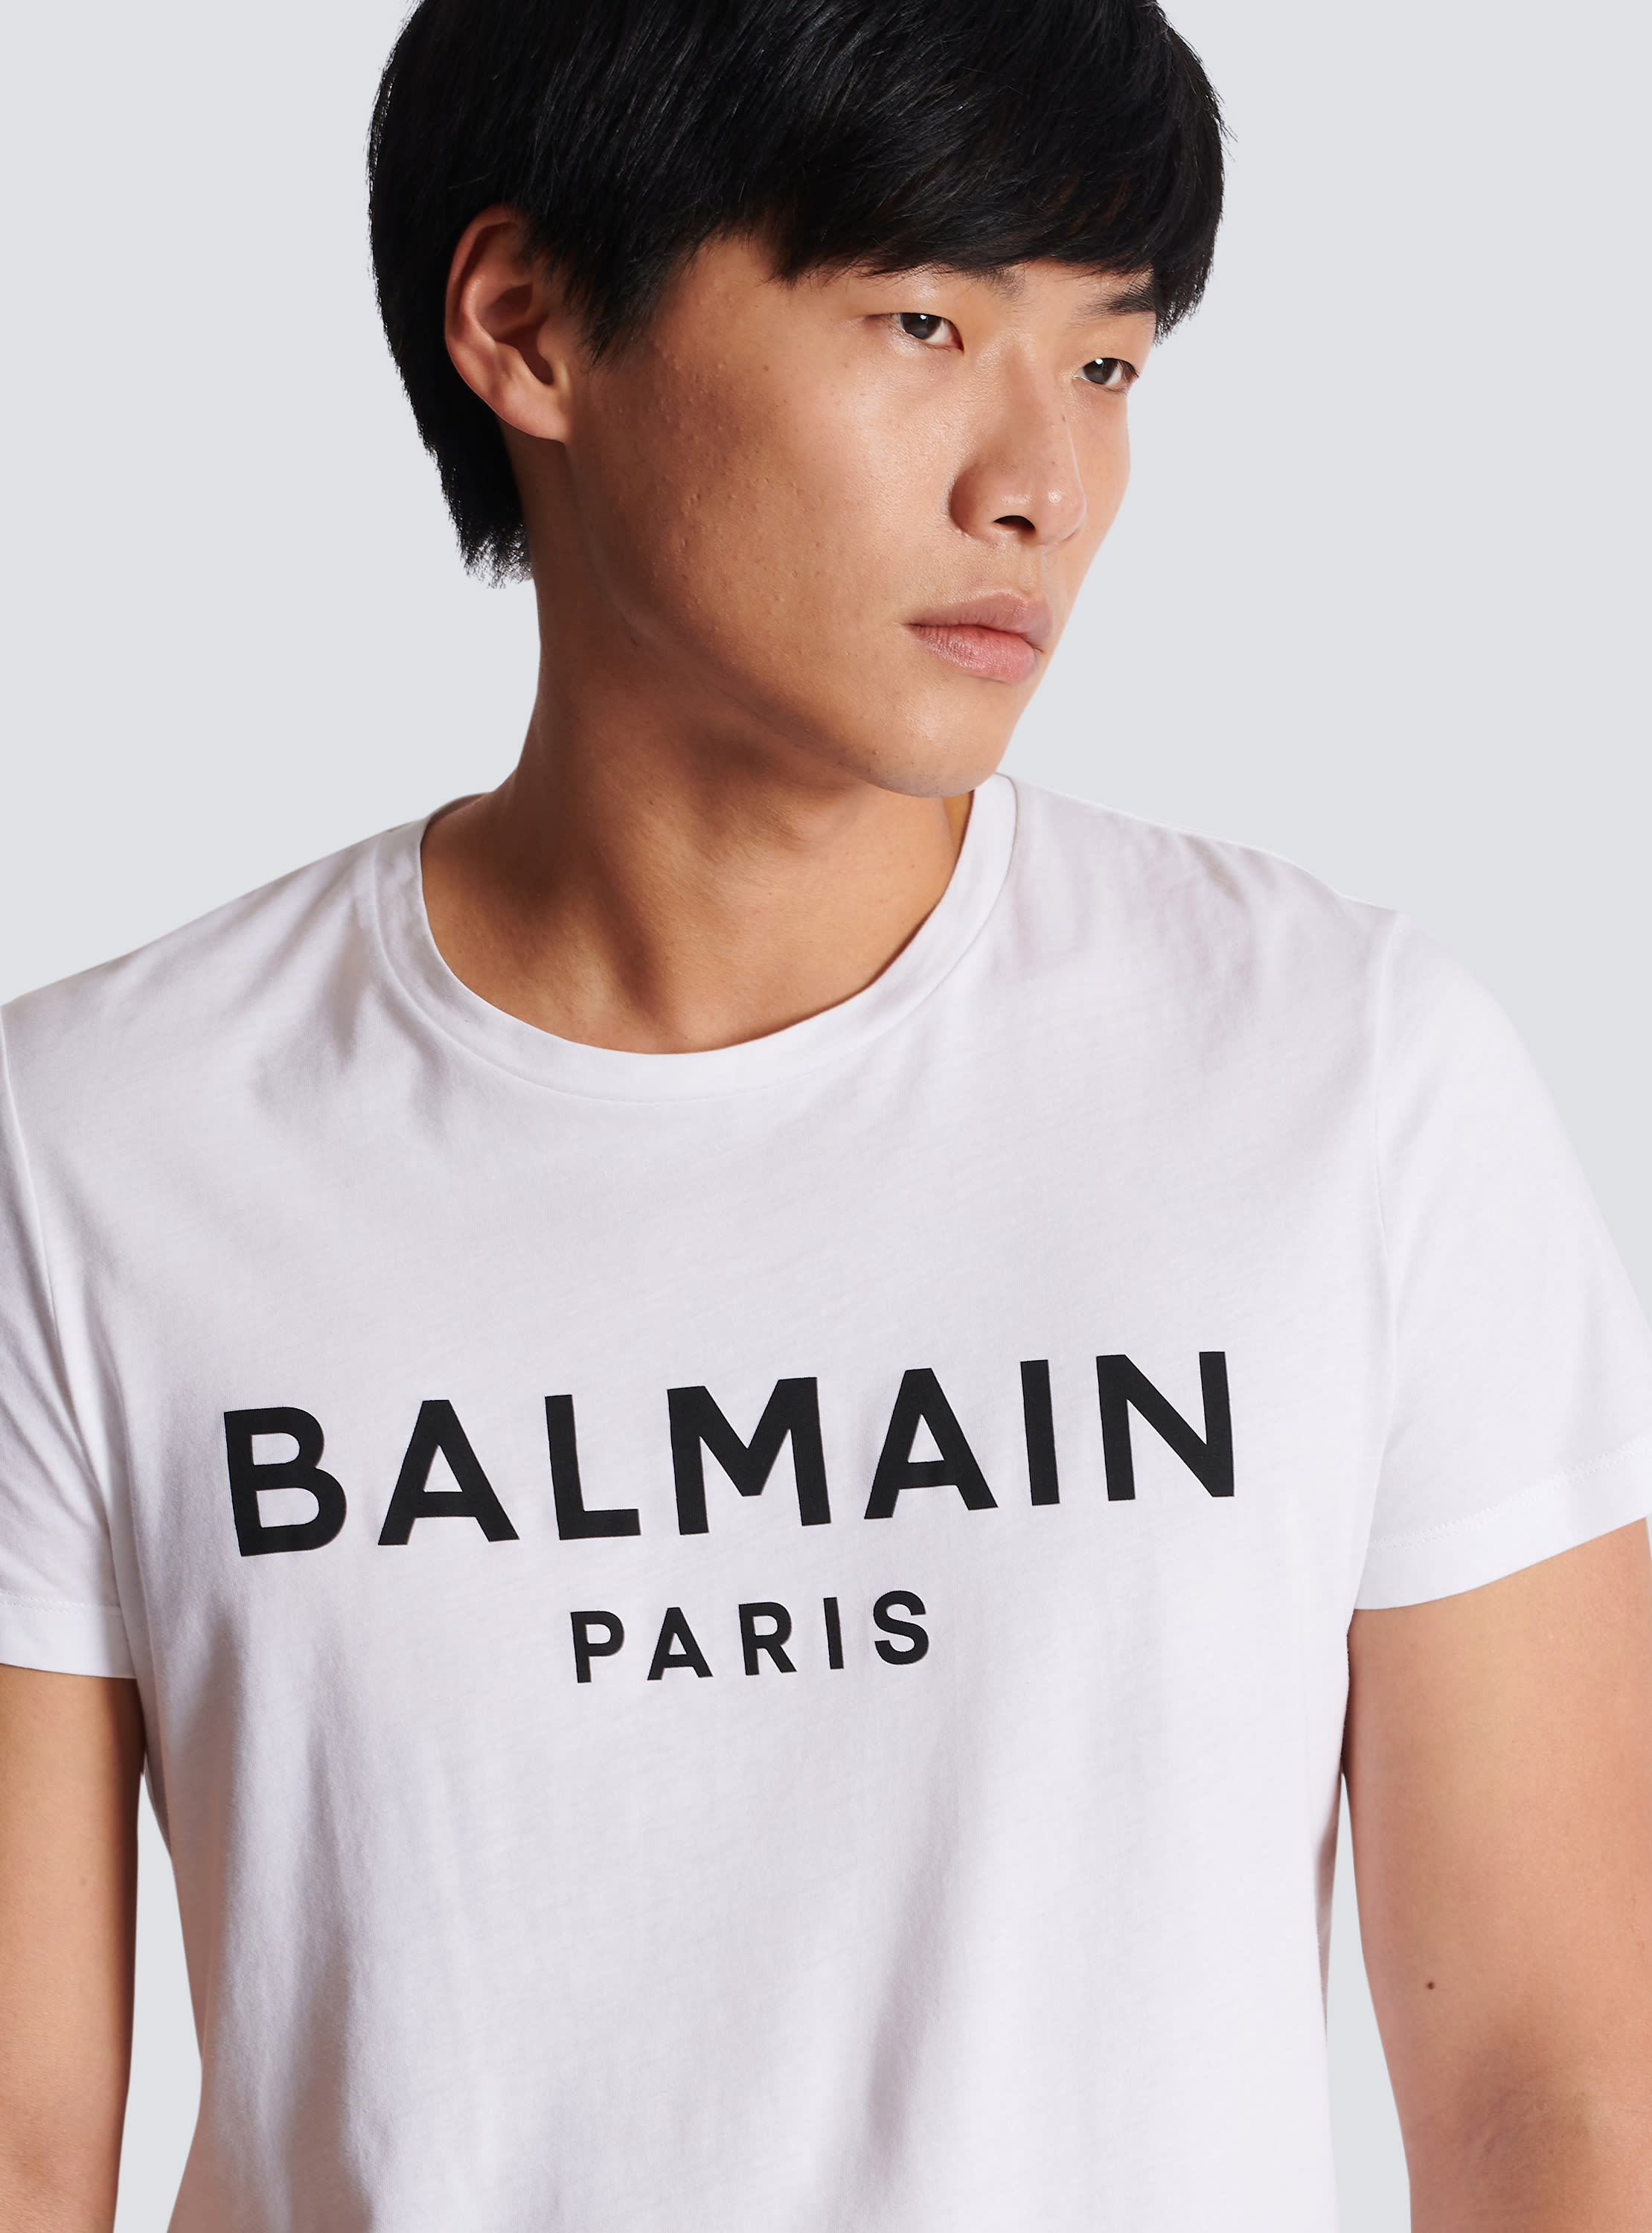 håber Pearly halvleder Balmain Paris T-shirt white - Men | BALMAIN